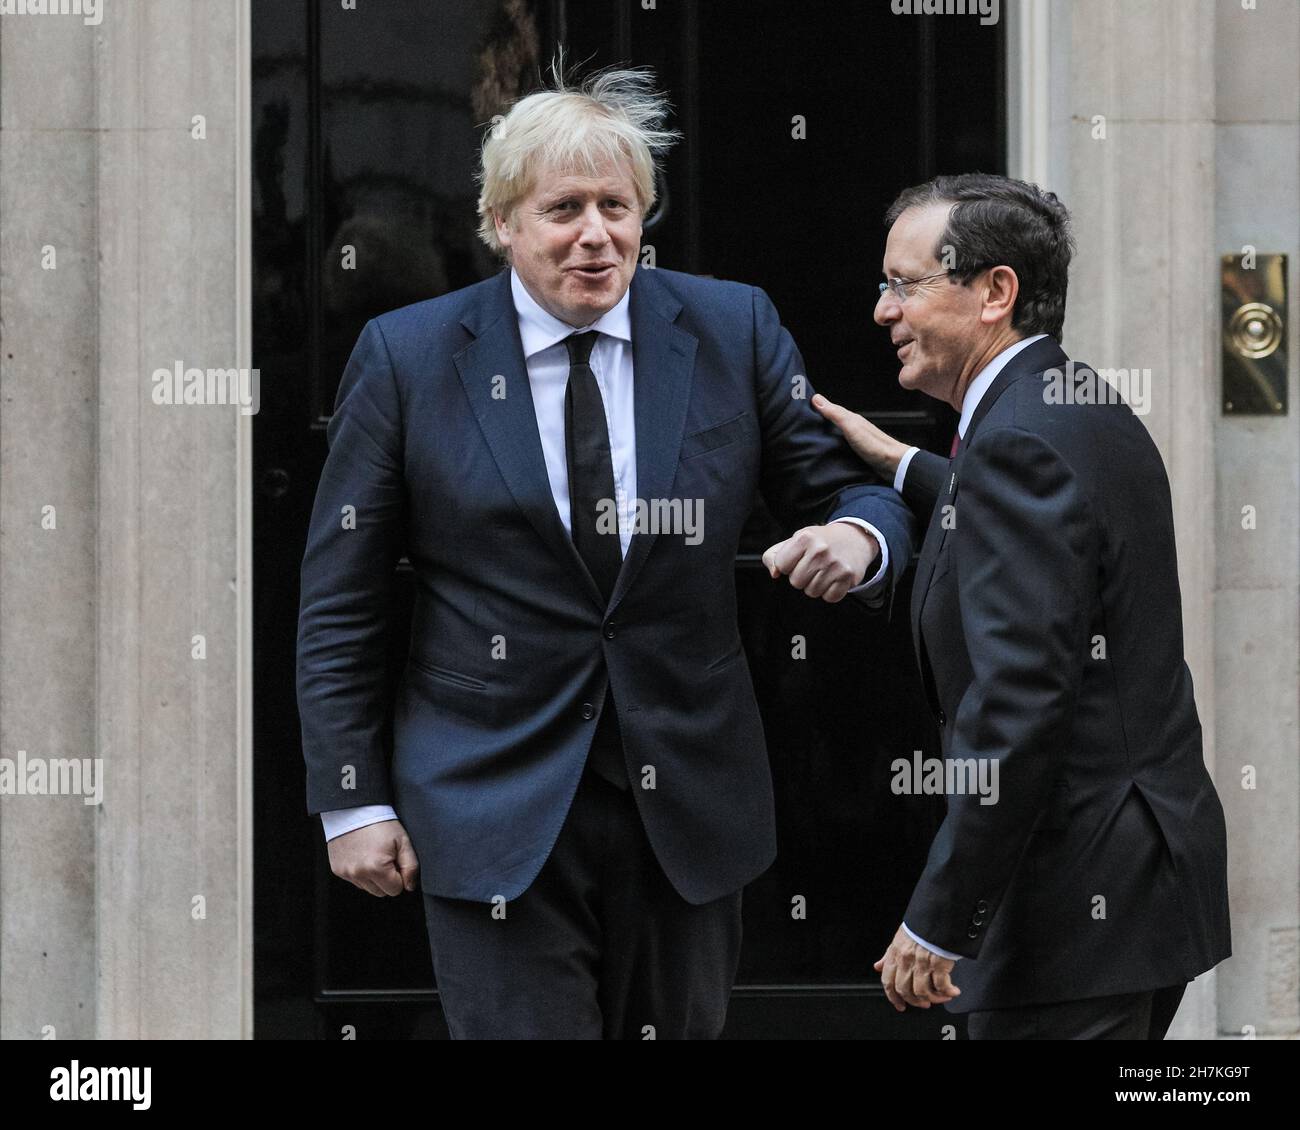 Downing Street, London, UK. 23rd Nov, 2021. Isaac Herzog, President of Israel, meets British Prime Minister Boris Johnson in Downing Street, London today. Credit: Imageplotter/Alamy Live News Stock Photo